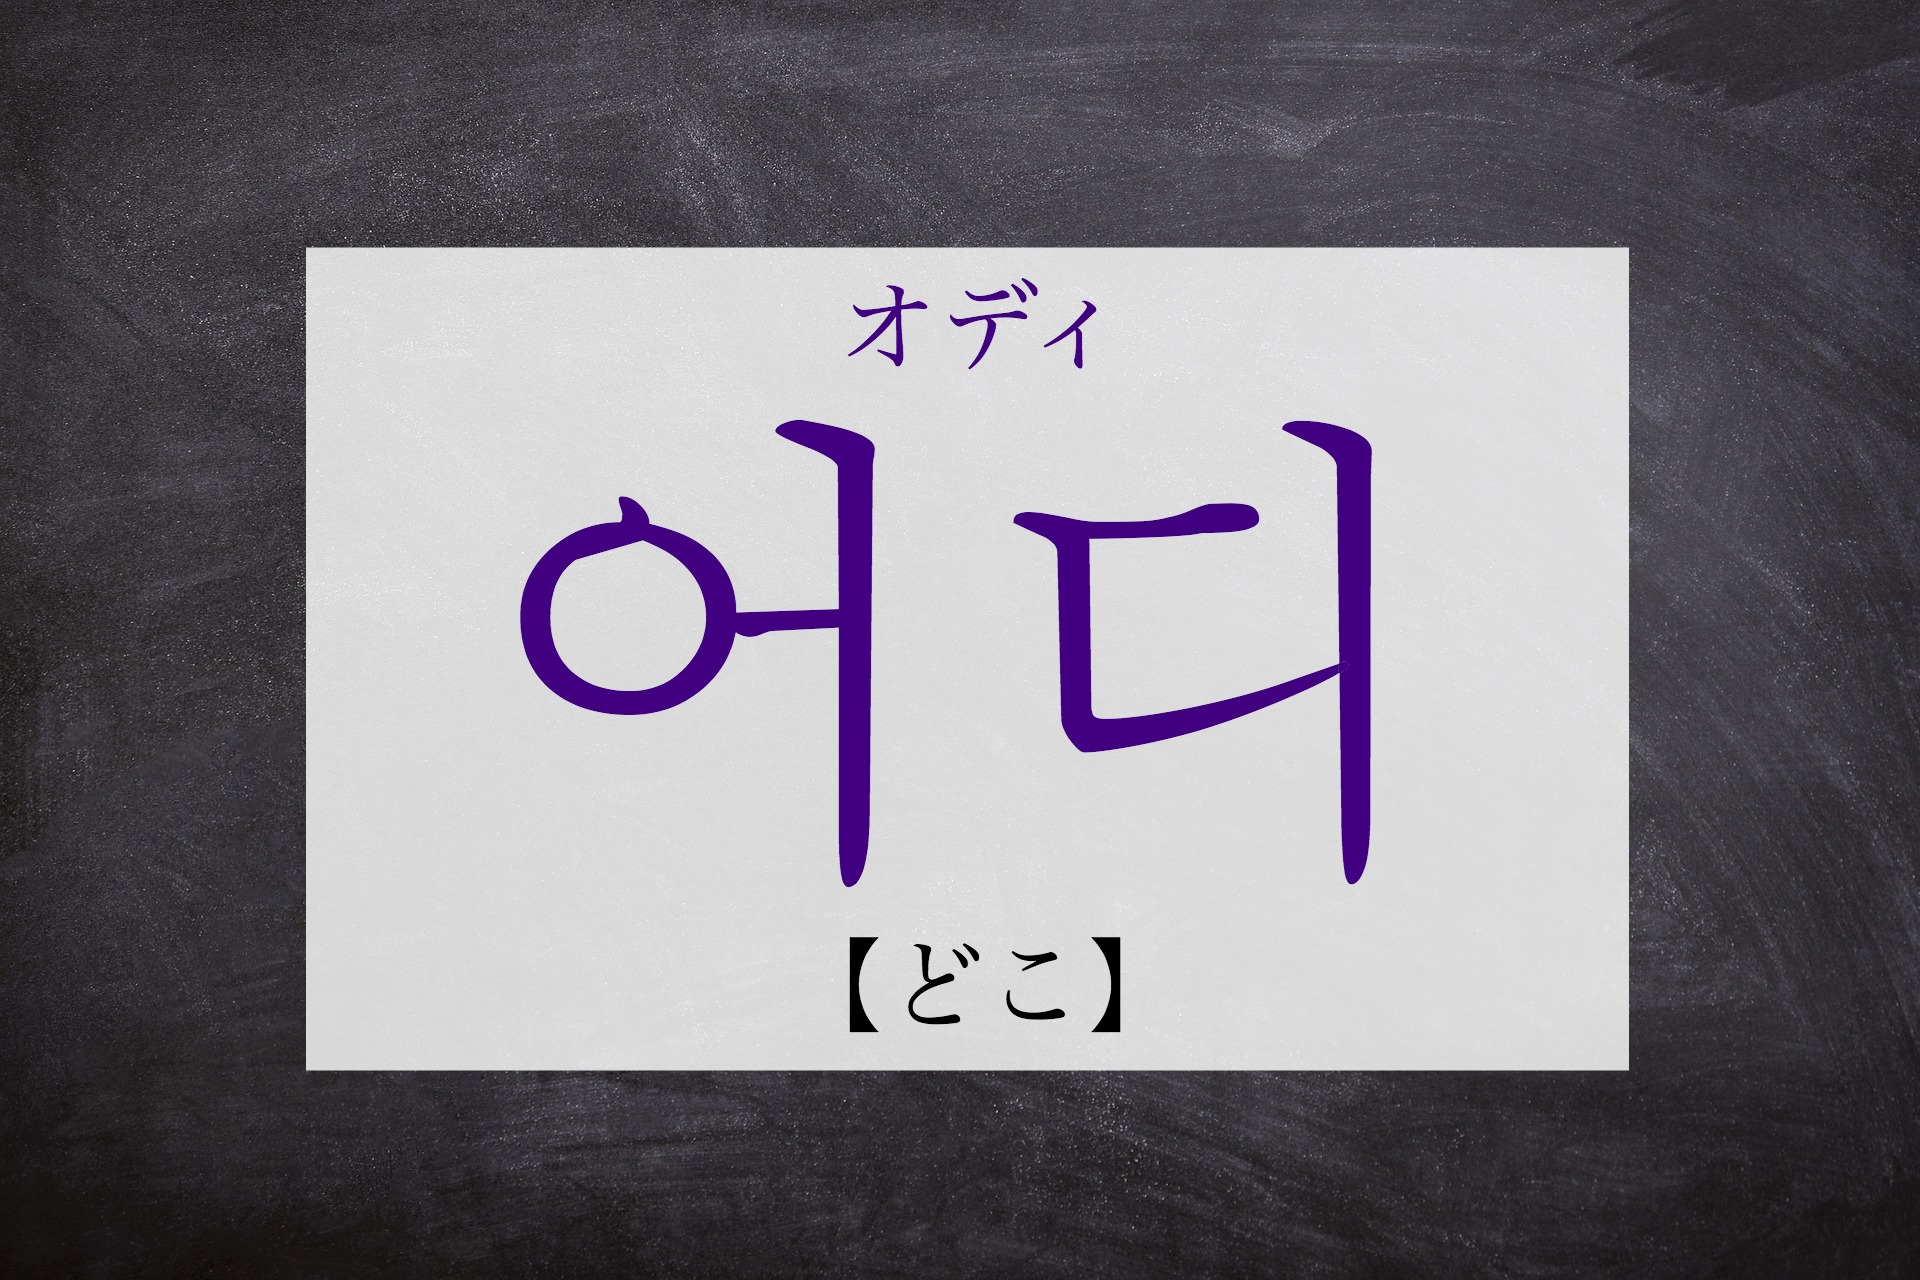 koreanword-where